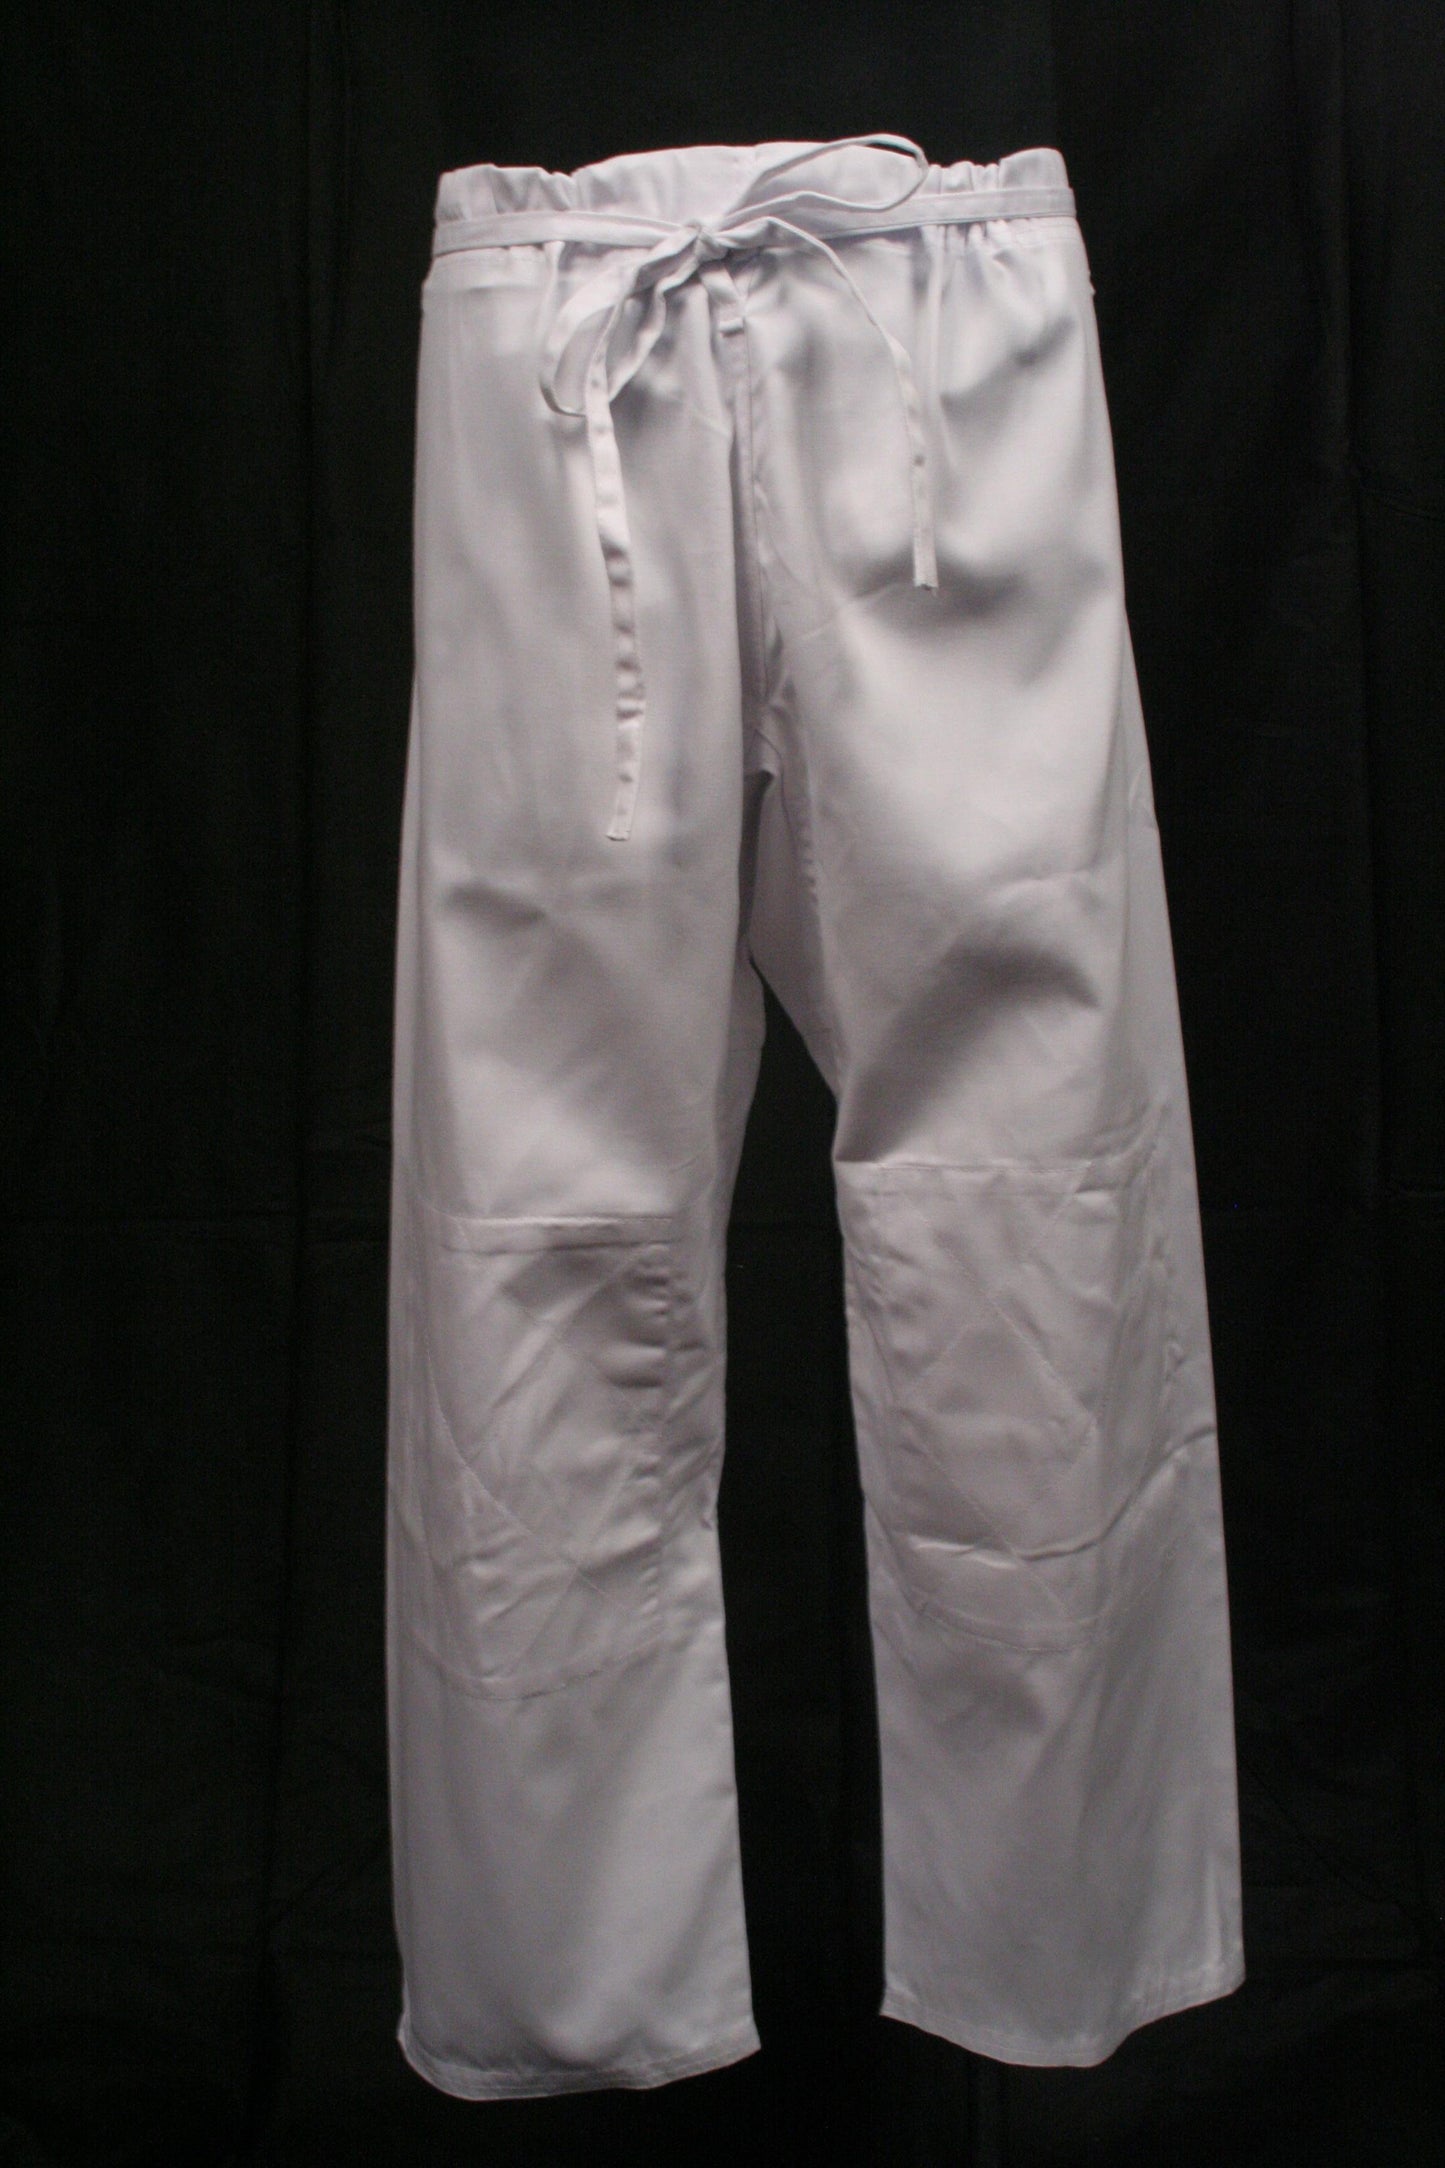 Single Weave Judo Uniform Gi - White